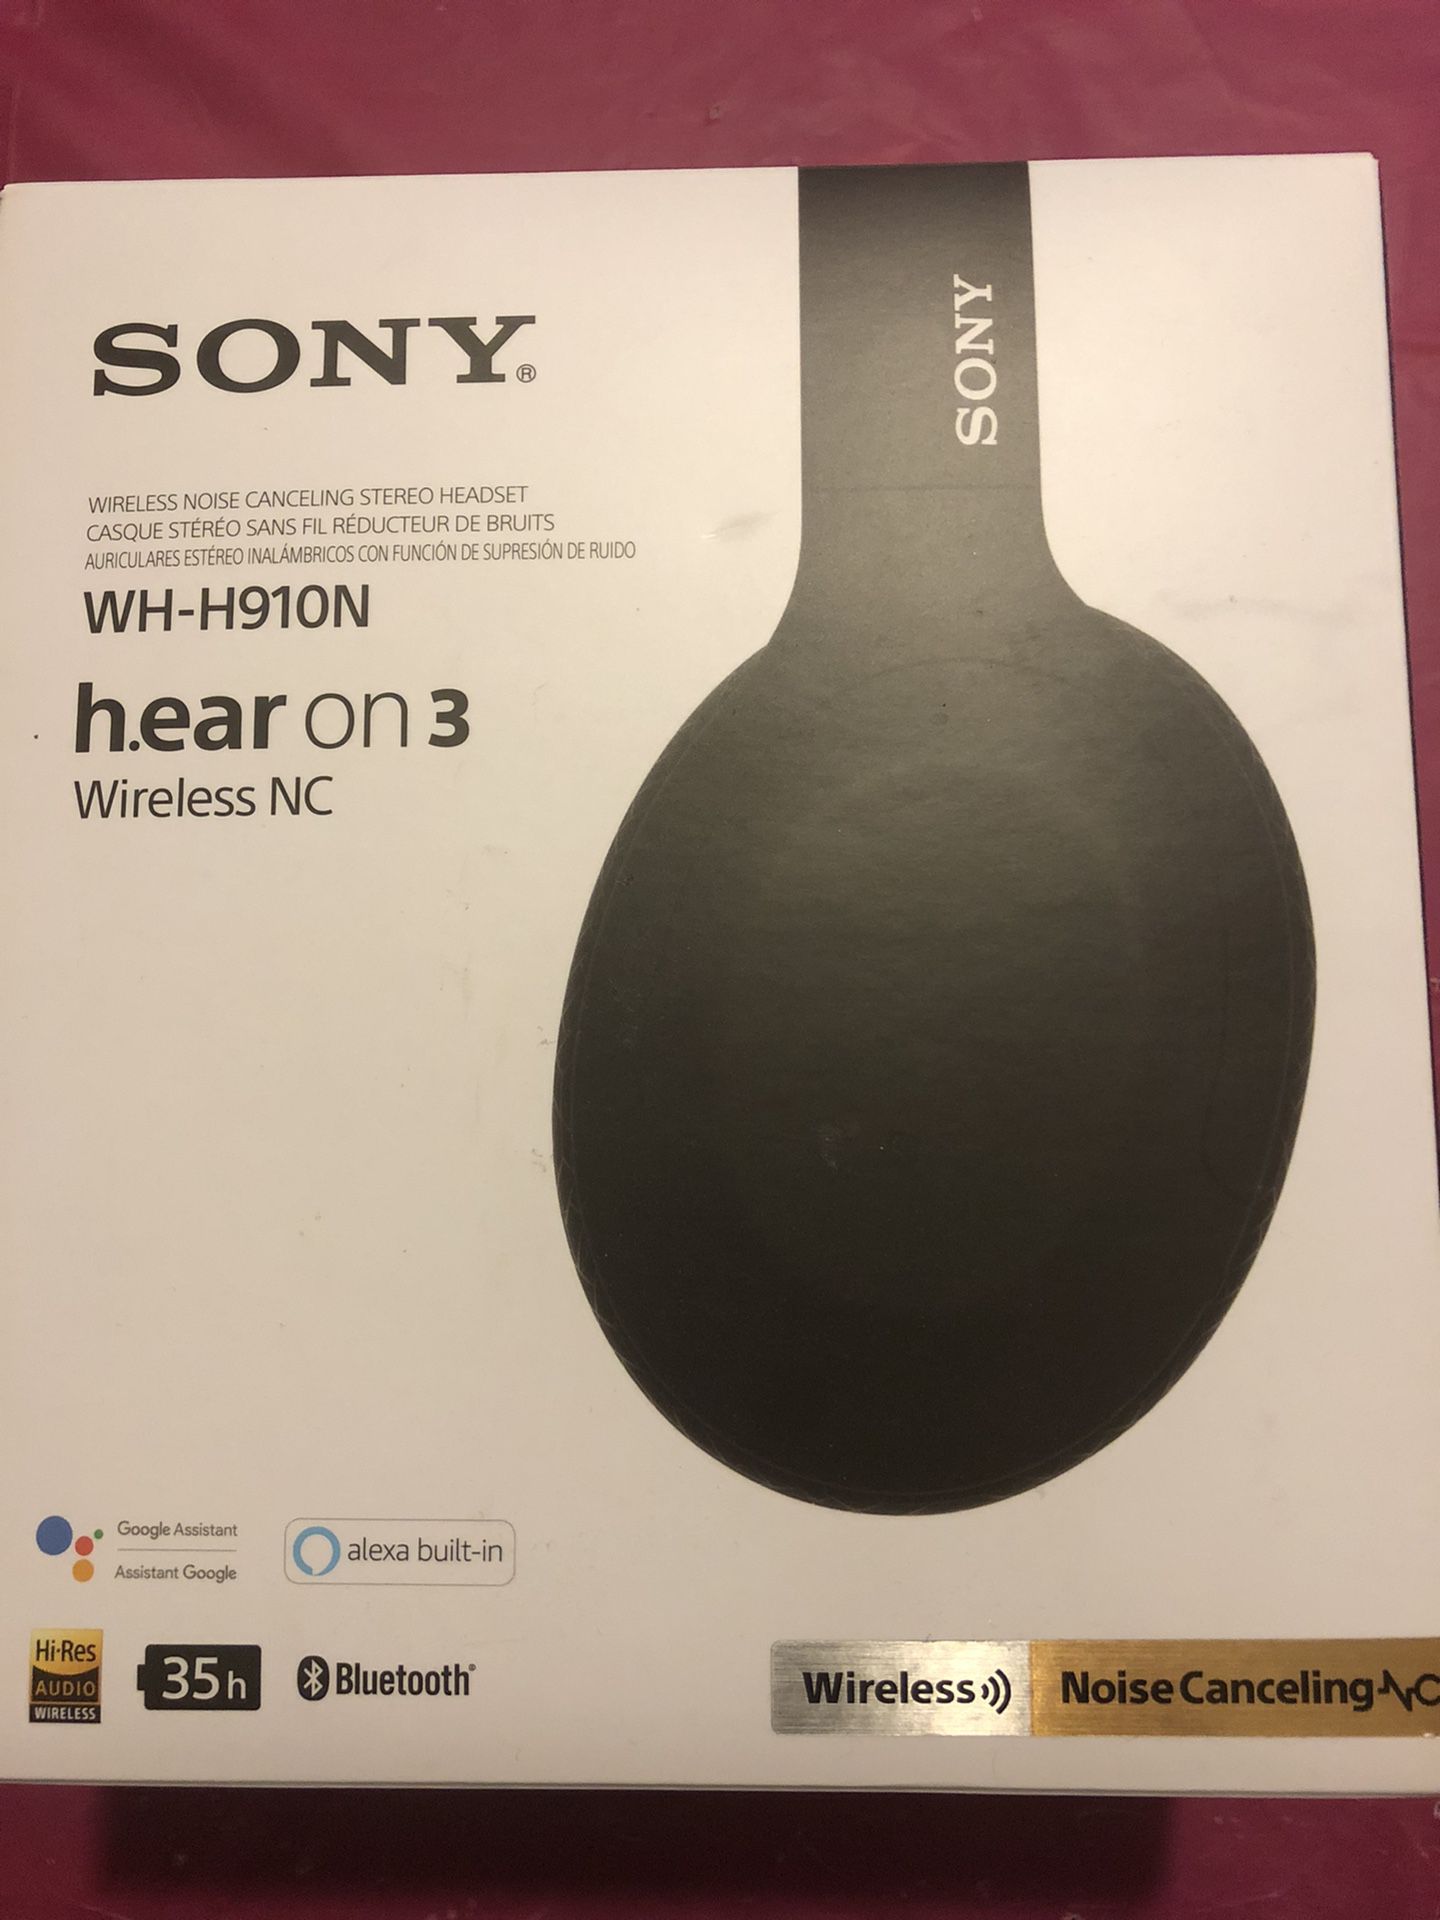 Sony Wireless Noise Canceling Stereo Headset H.ear On 3!